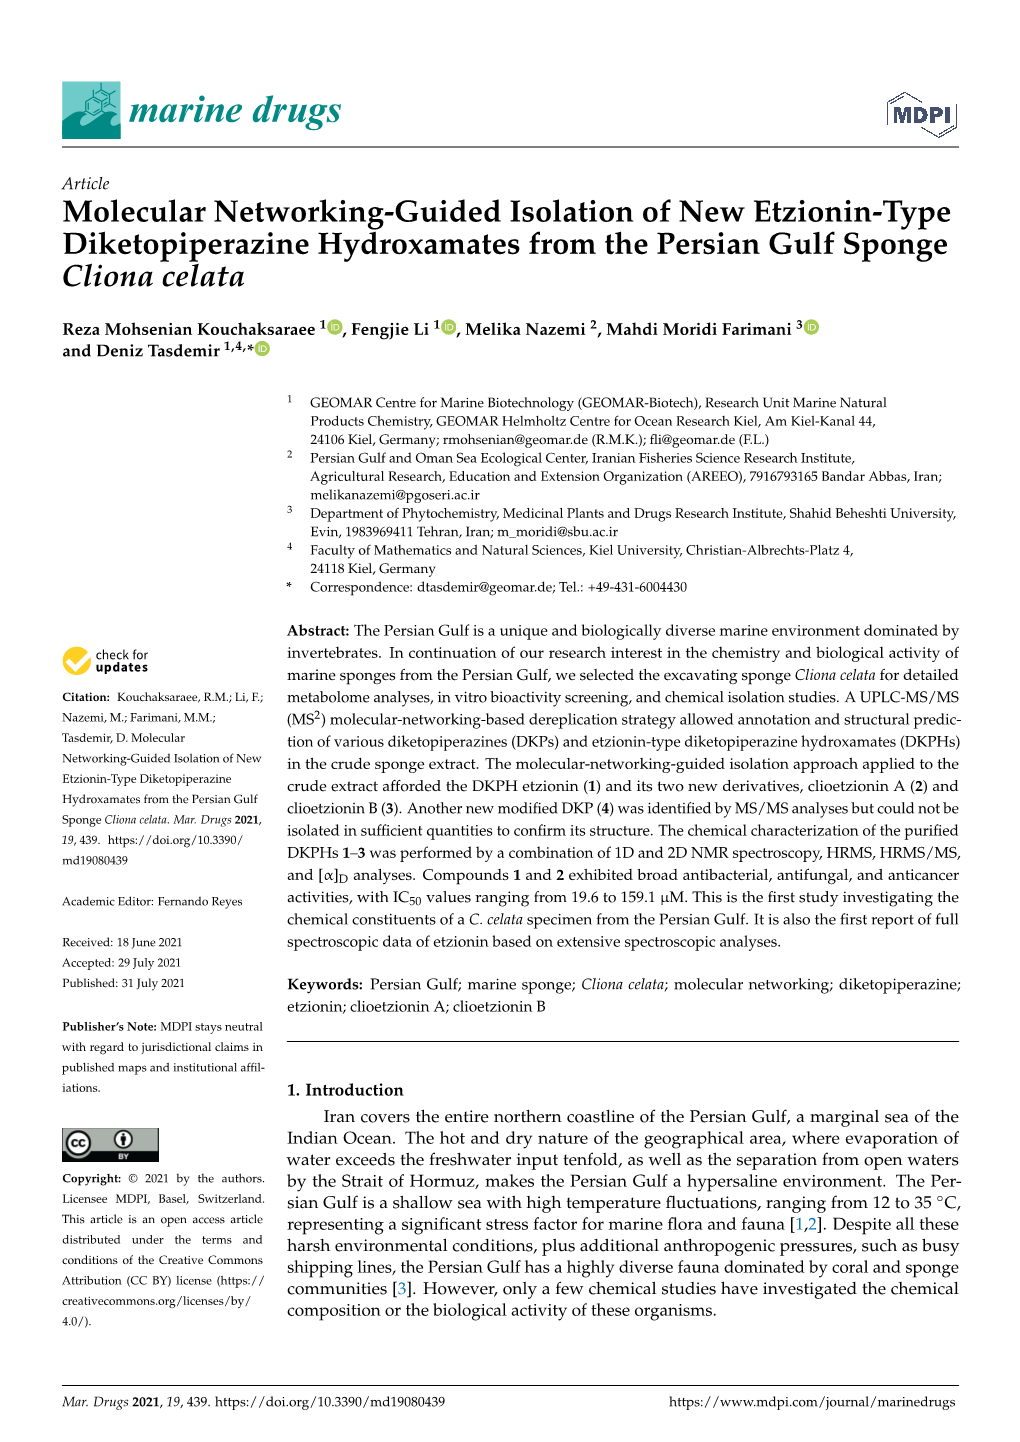 Molecular Networking-Guided Isolation of New Etzionin-Type Diketopiperazine Hydroxamates from the Persian Gulf Sponge Cliona Celata